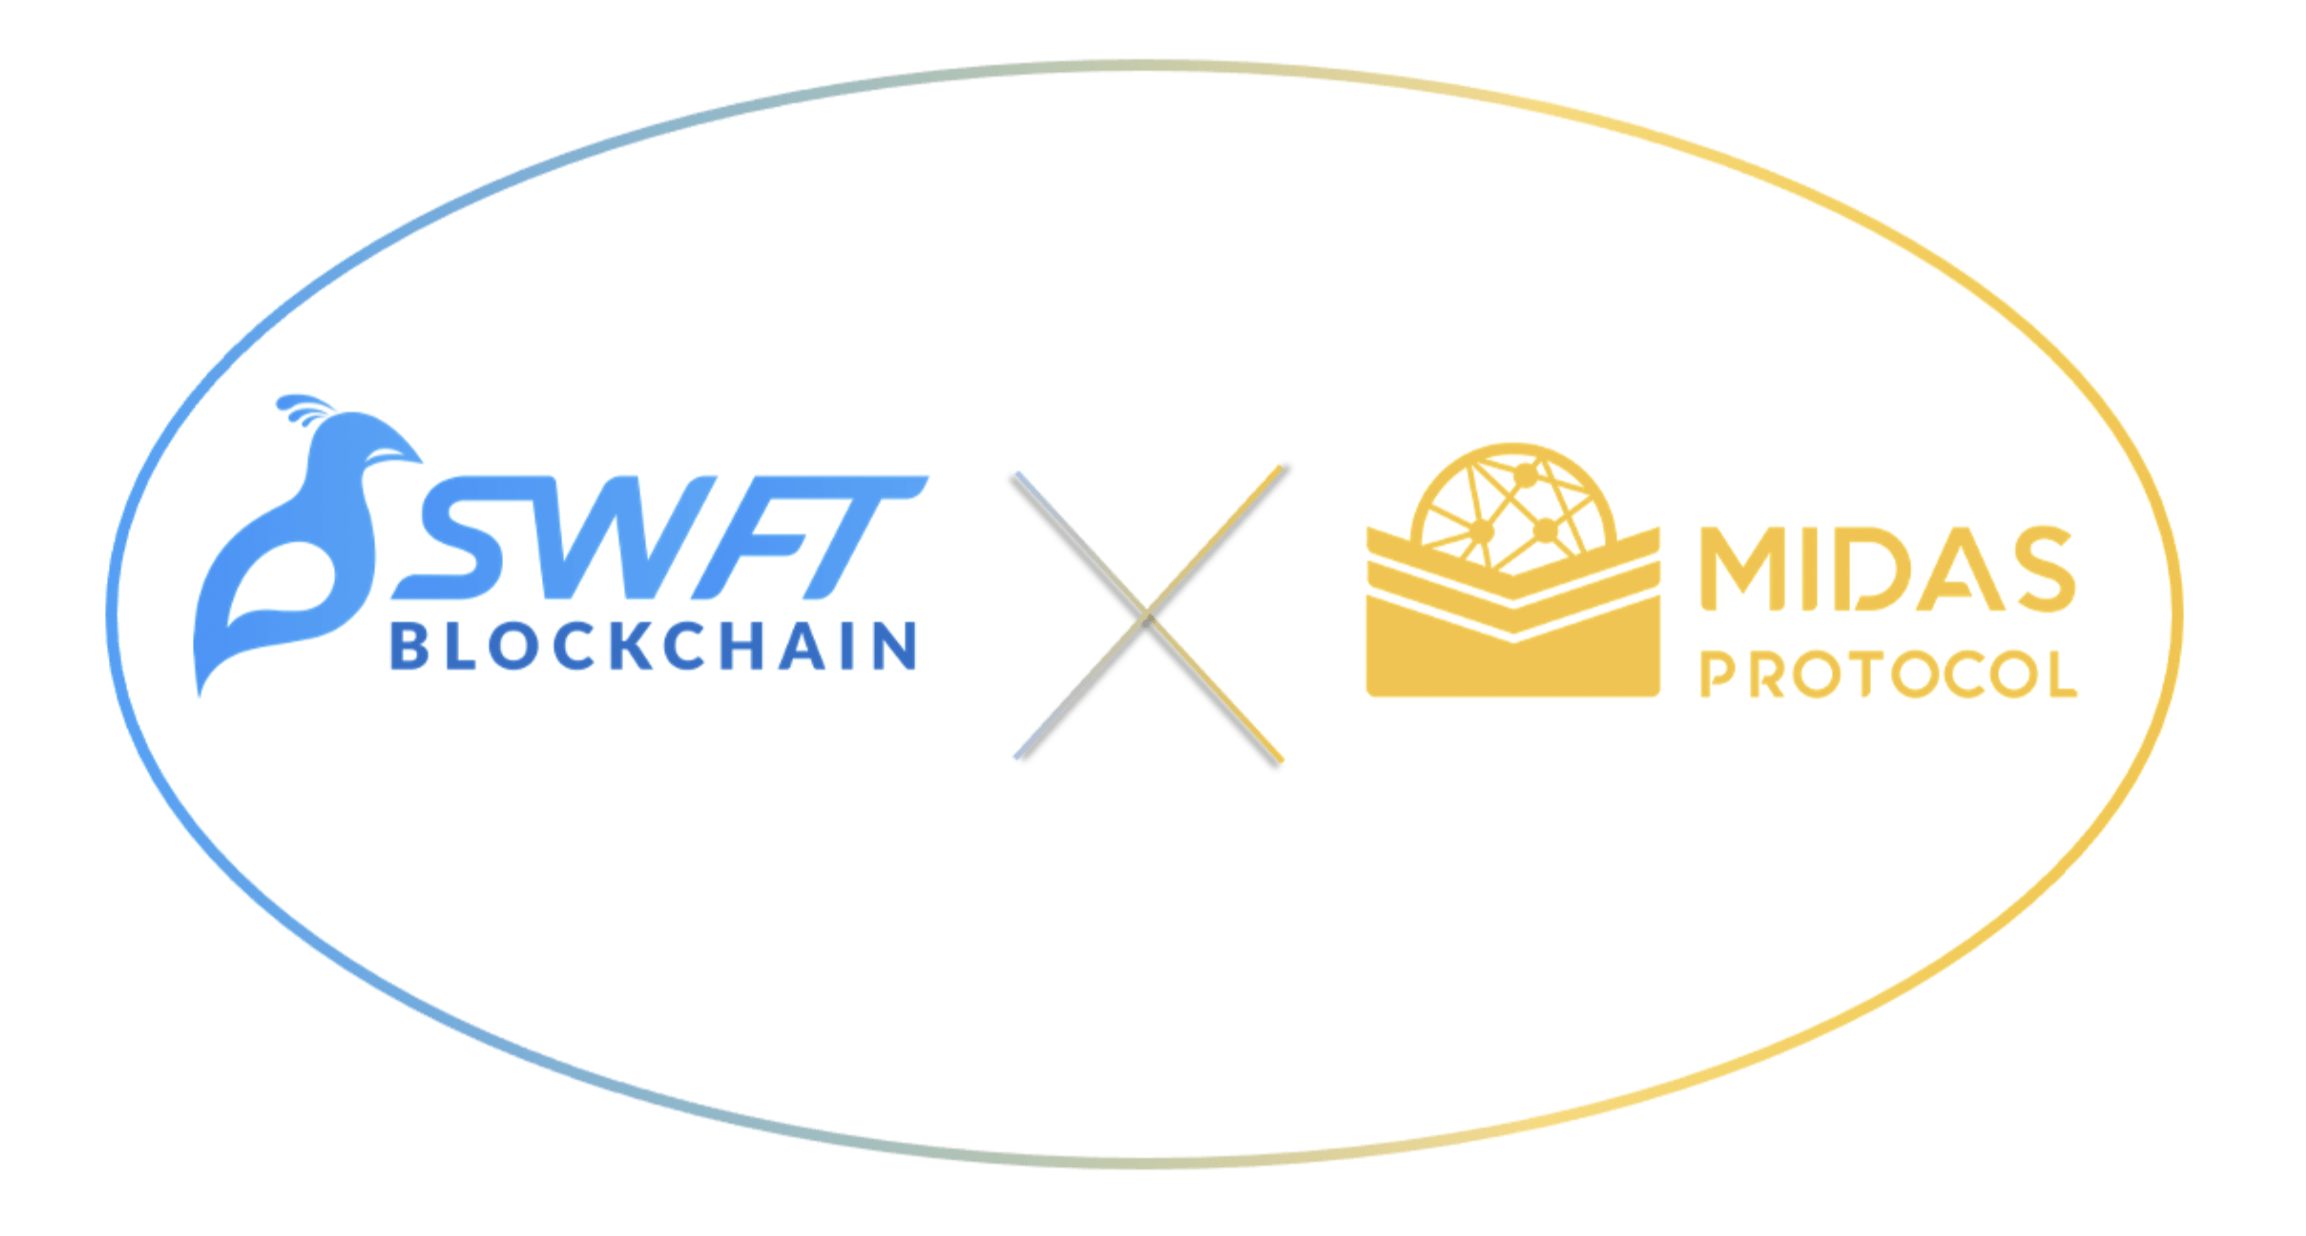 SWFT Blockchain x Midas Protocol Partnership